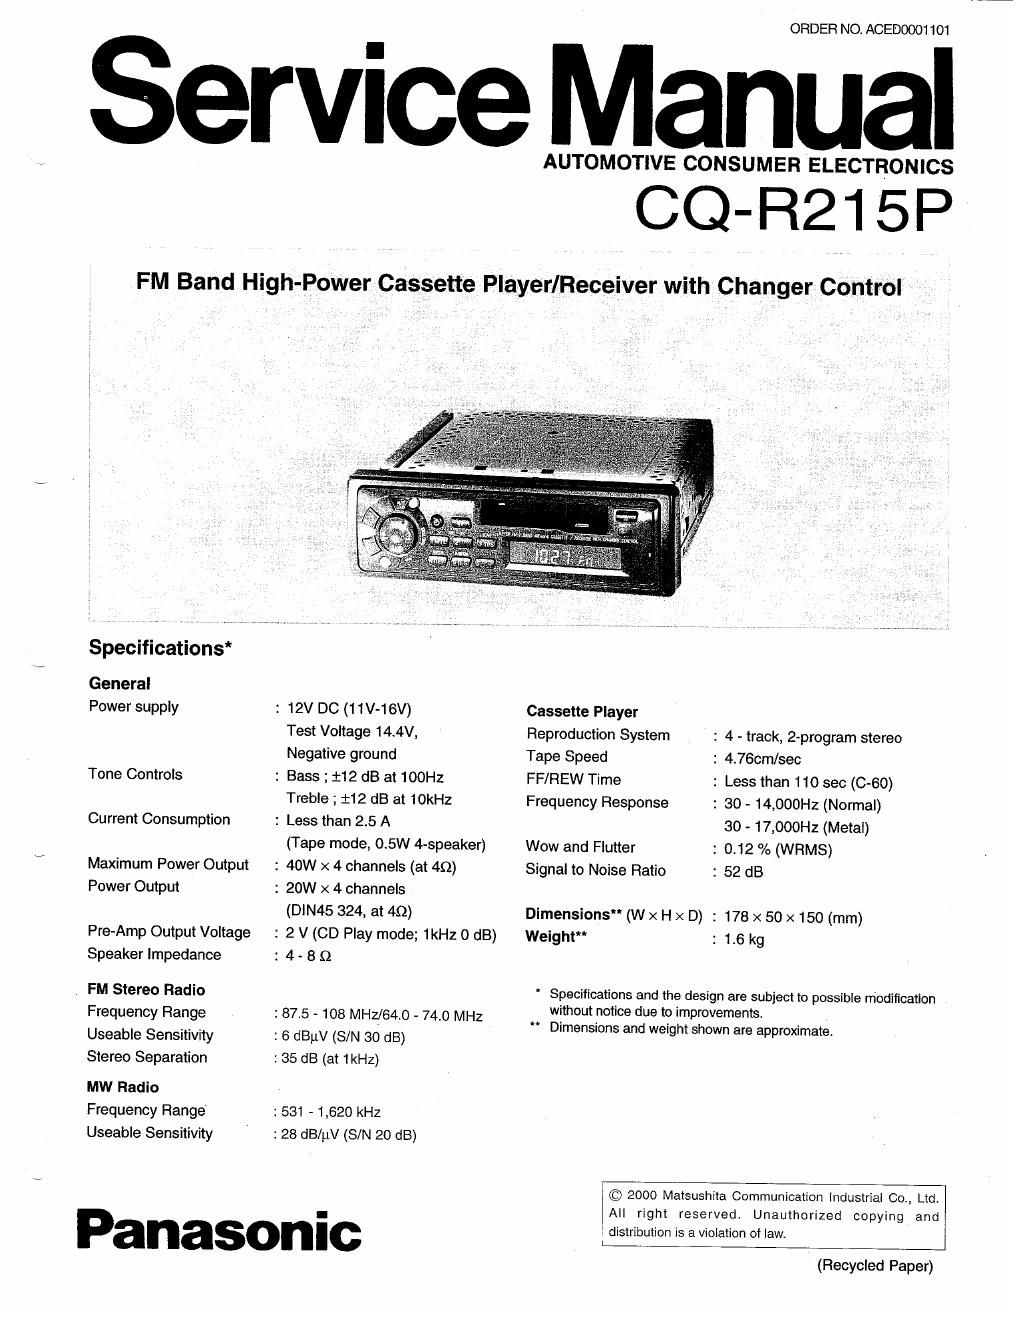 panasonic cq r 215 p service manual